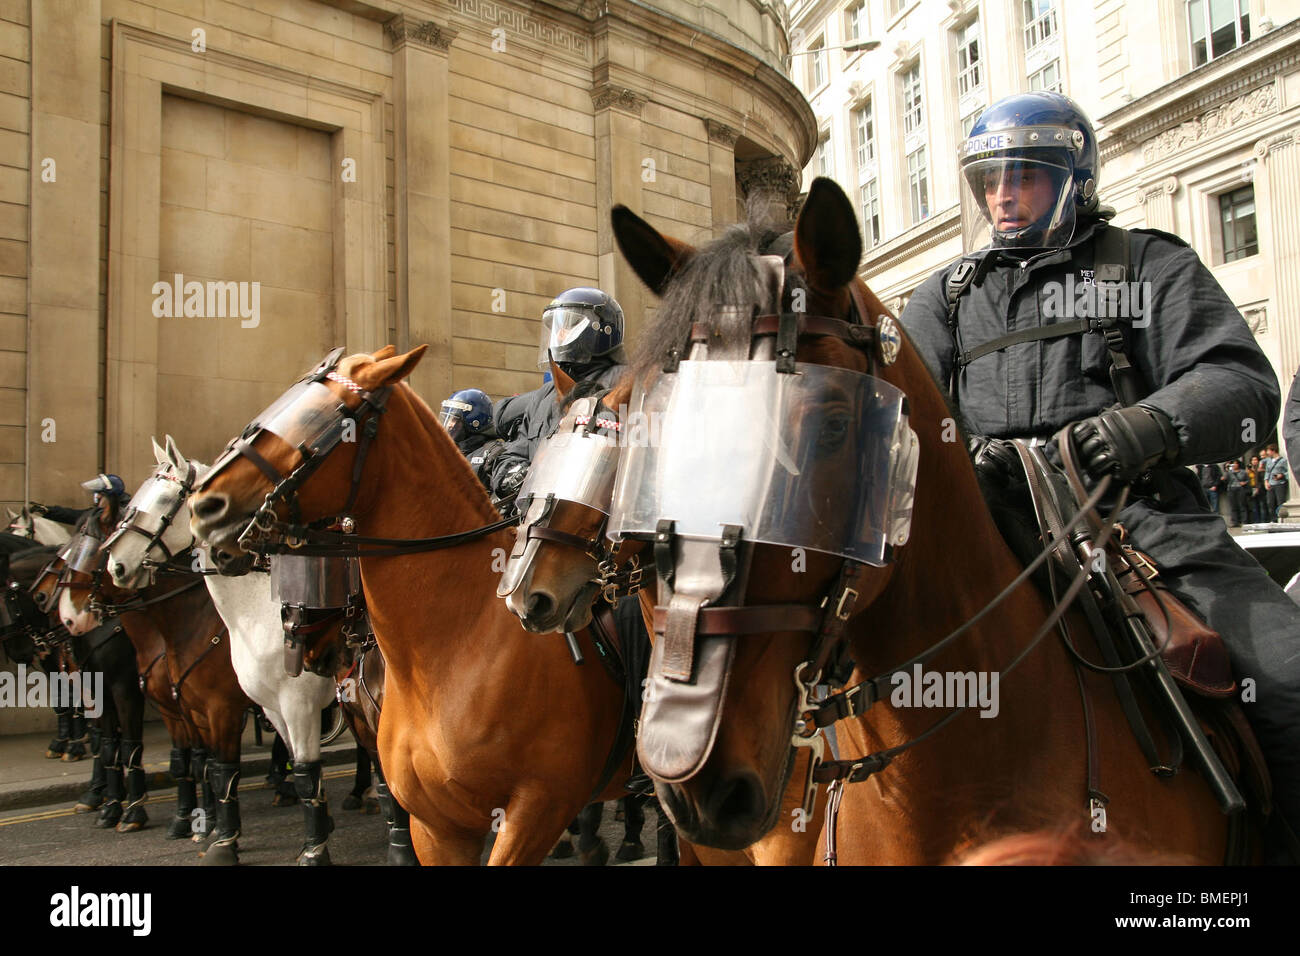 police horses ready outside bank Stock Photo